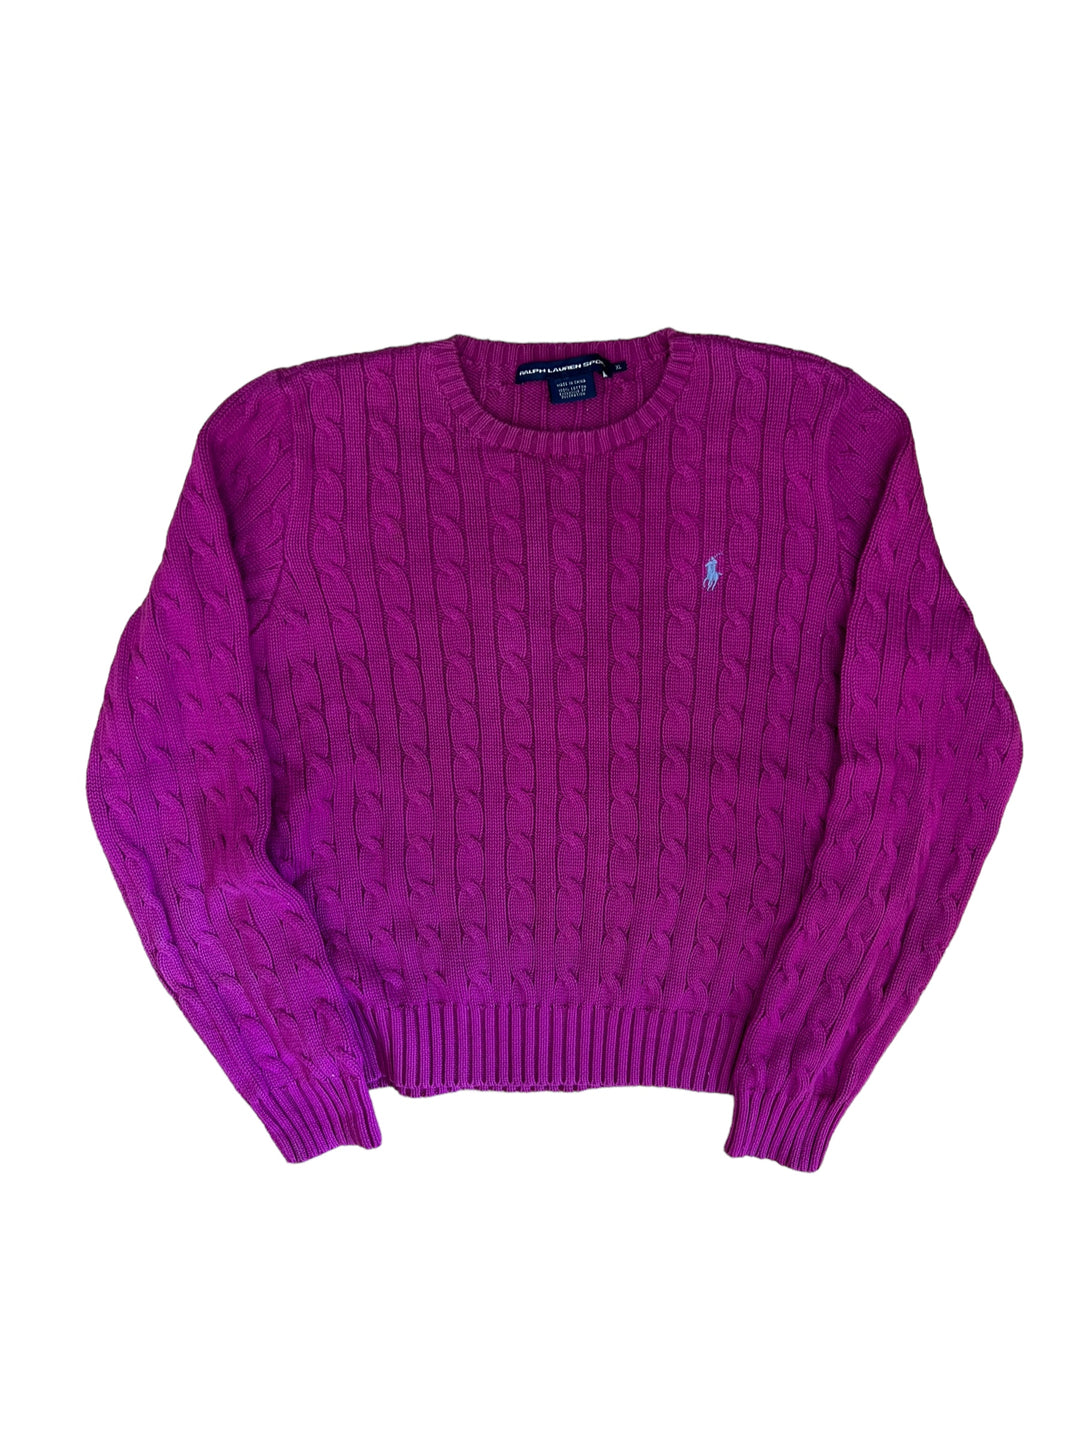 POLO RALPH LAUREN vintage Knit Sweater women’s large slim fit